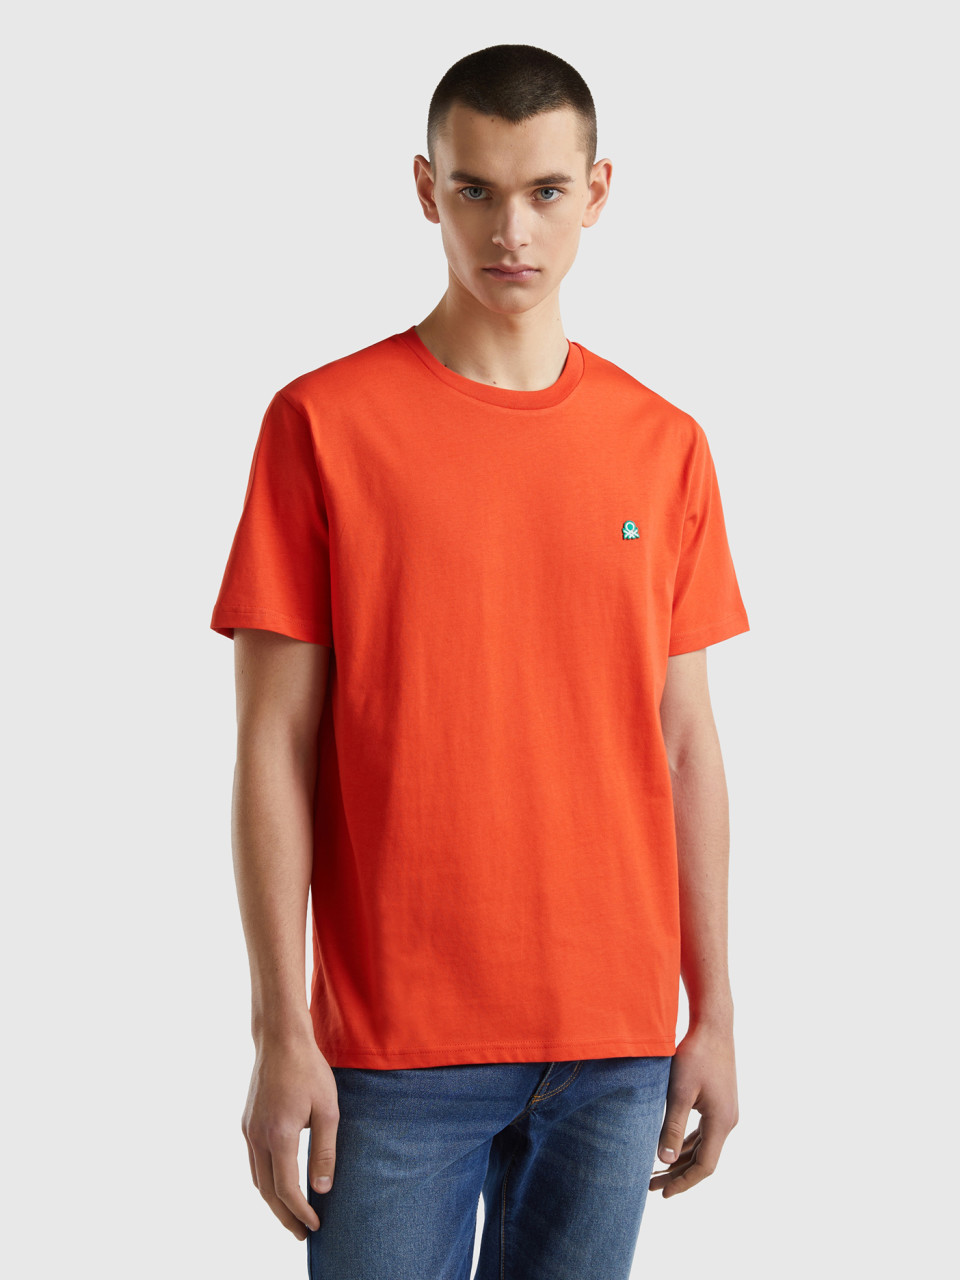 Benetton, 100% Organic Cotton Basic T-shirt, Red, Men